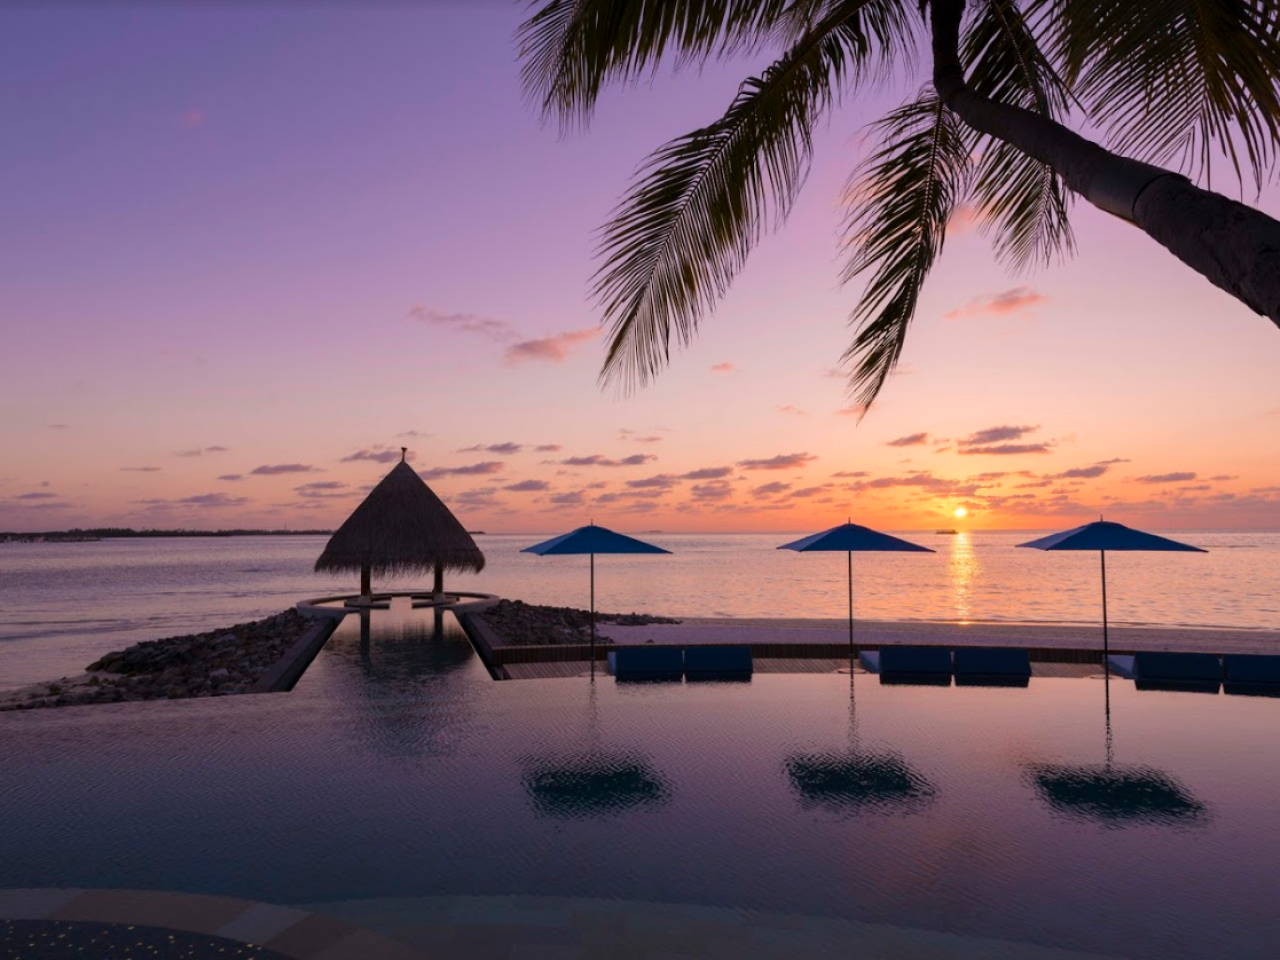 Four Seasons Resort Maldives At Kuda Huraa - Meemu